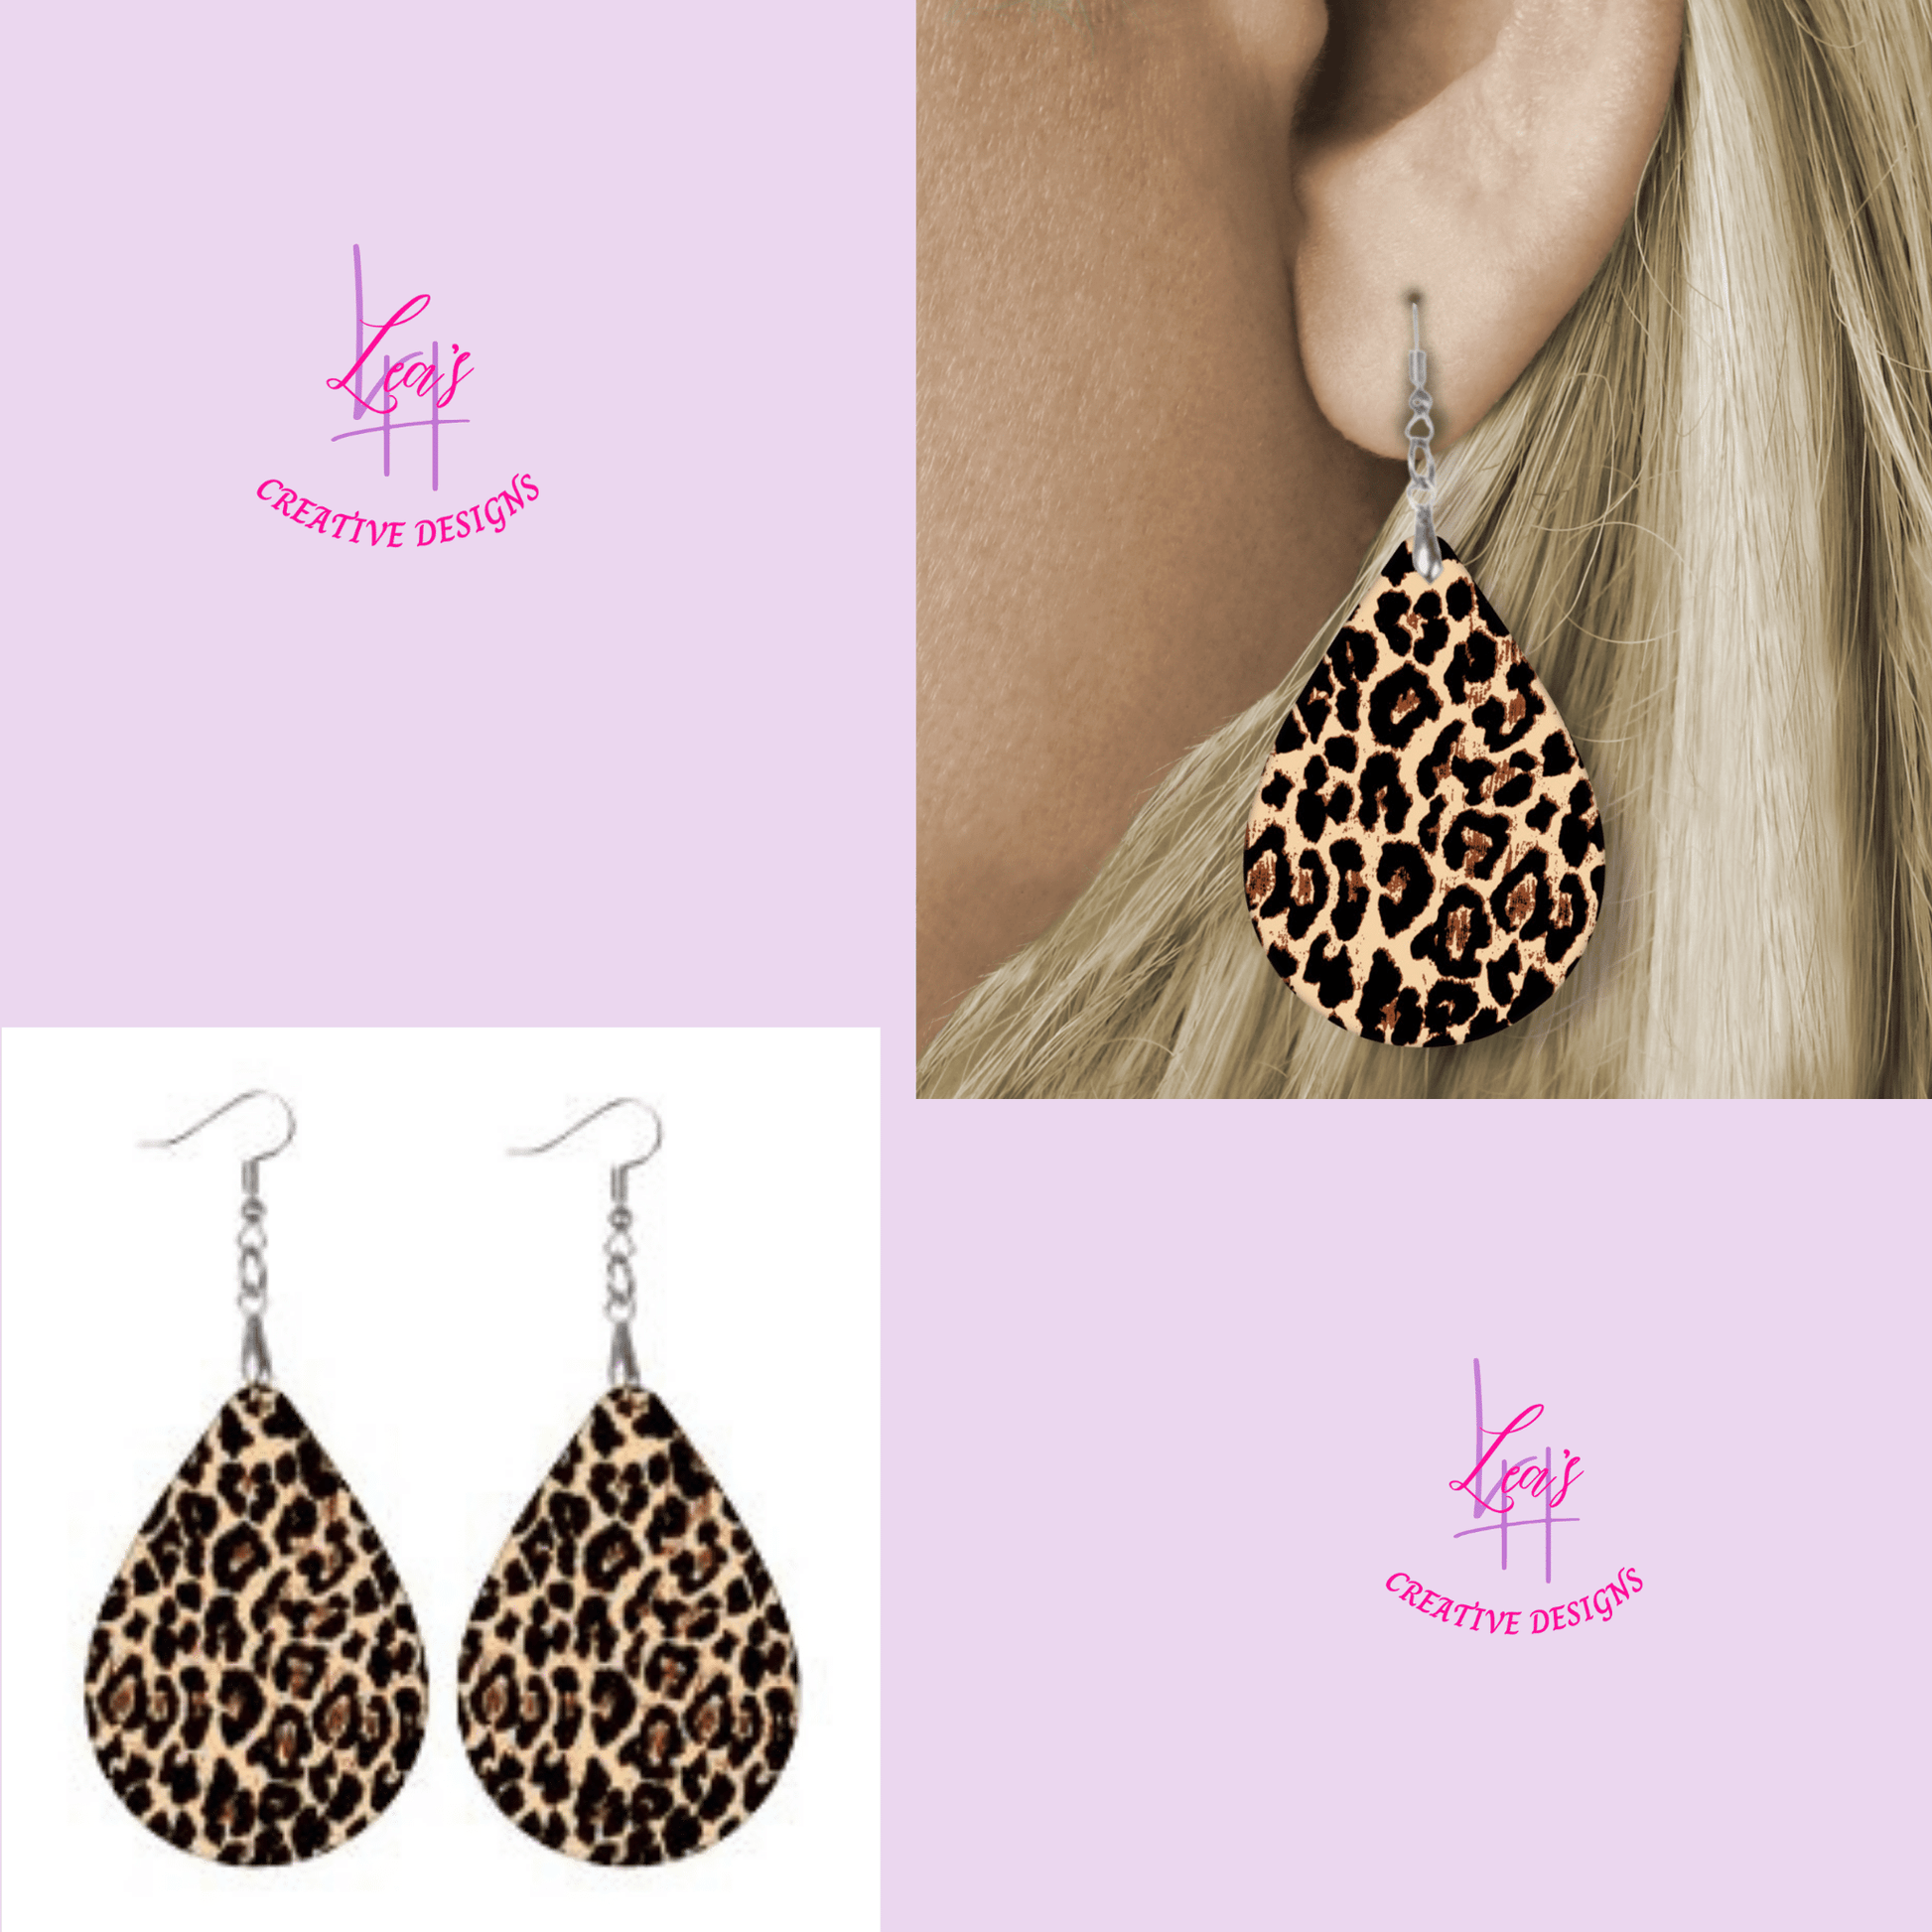 Lea's Creative Designs Earrings Spotted Cheetah Print Teardrop Earrings